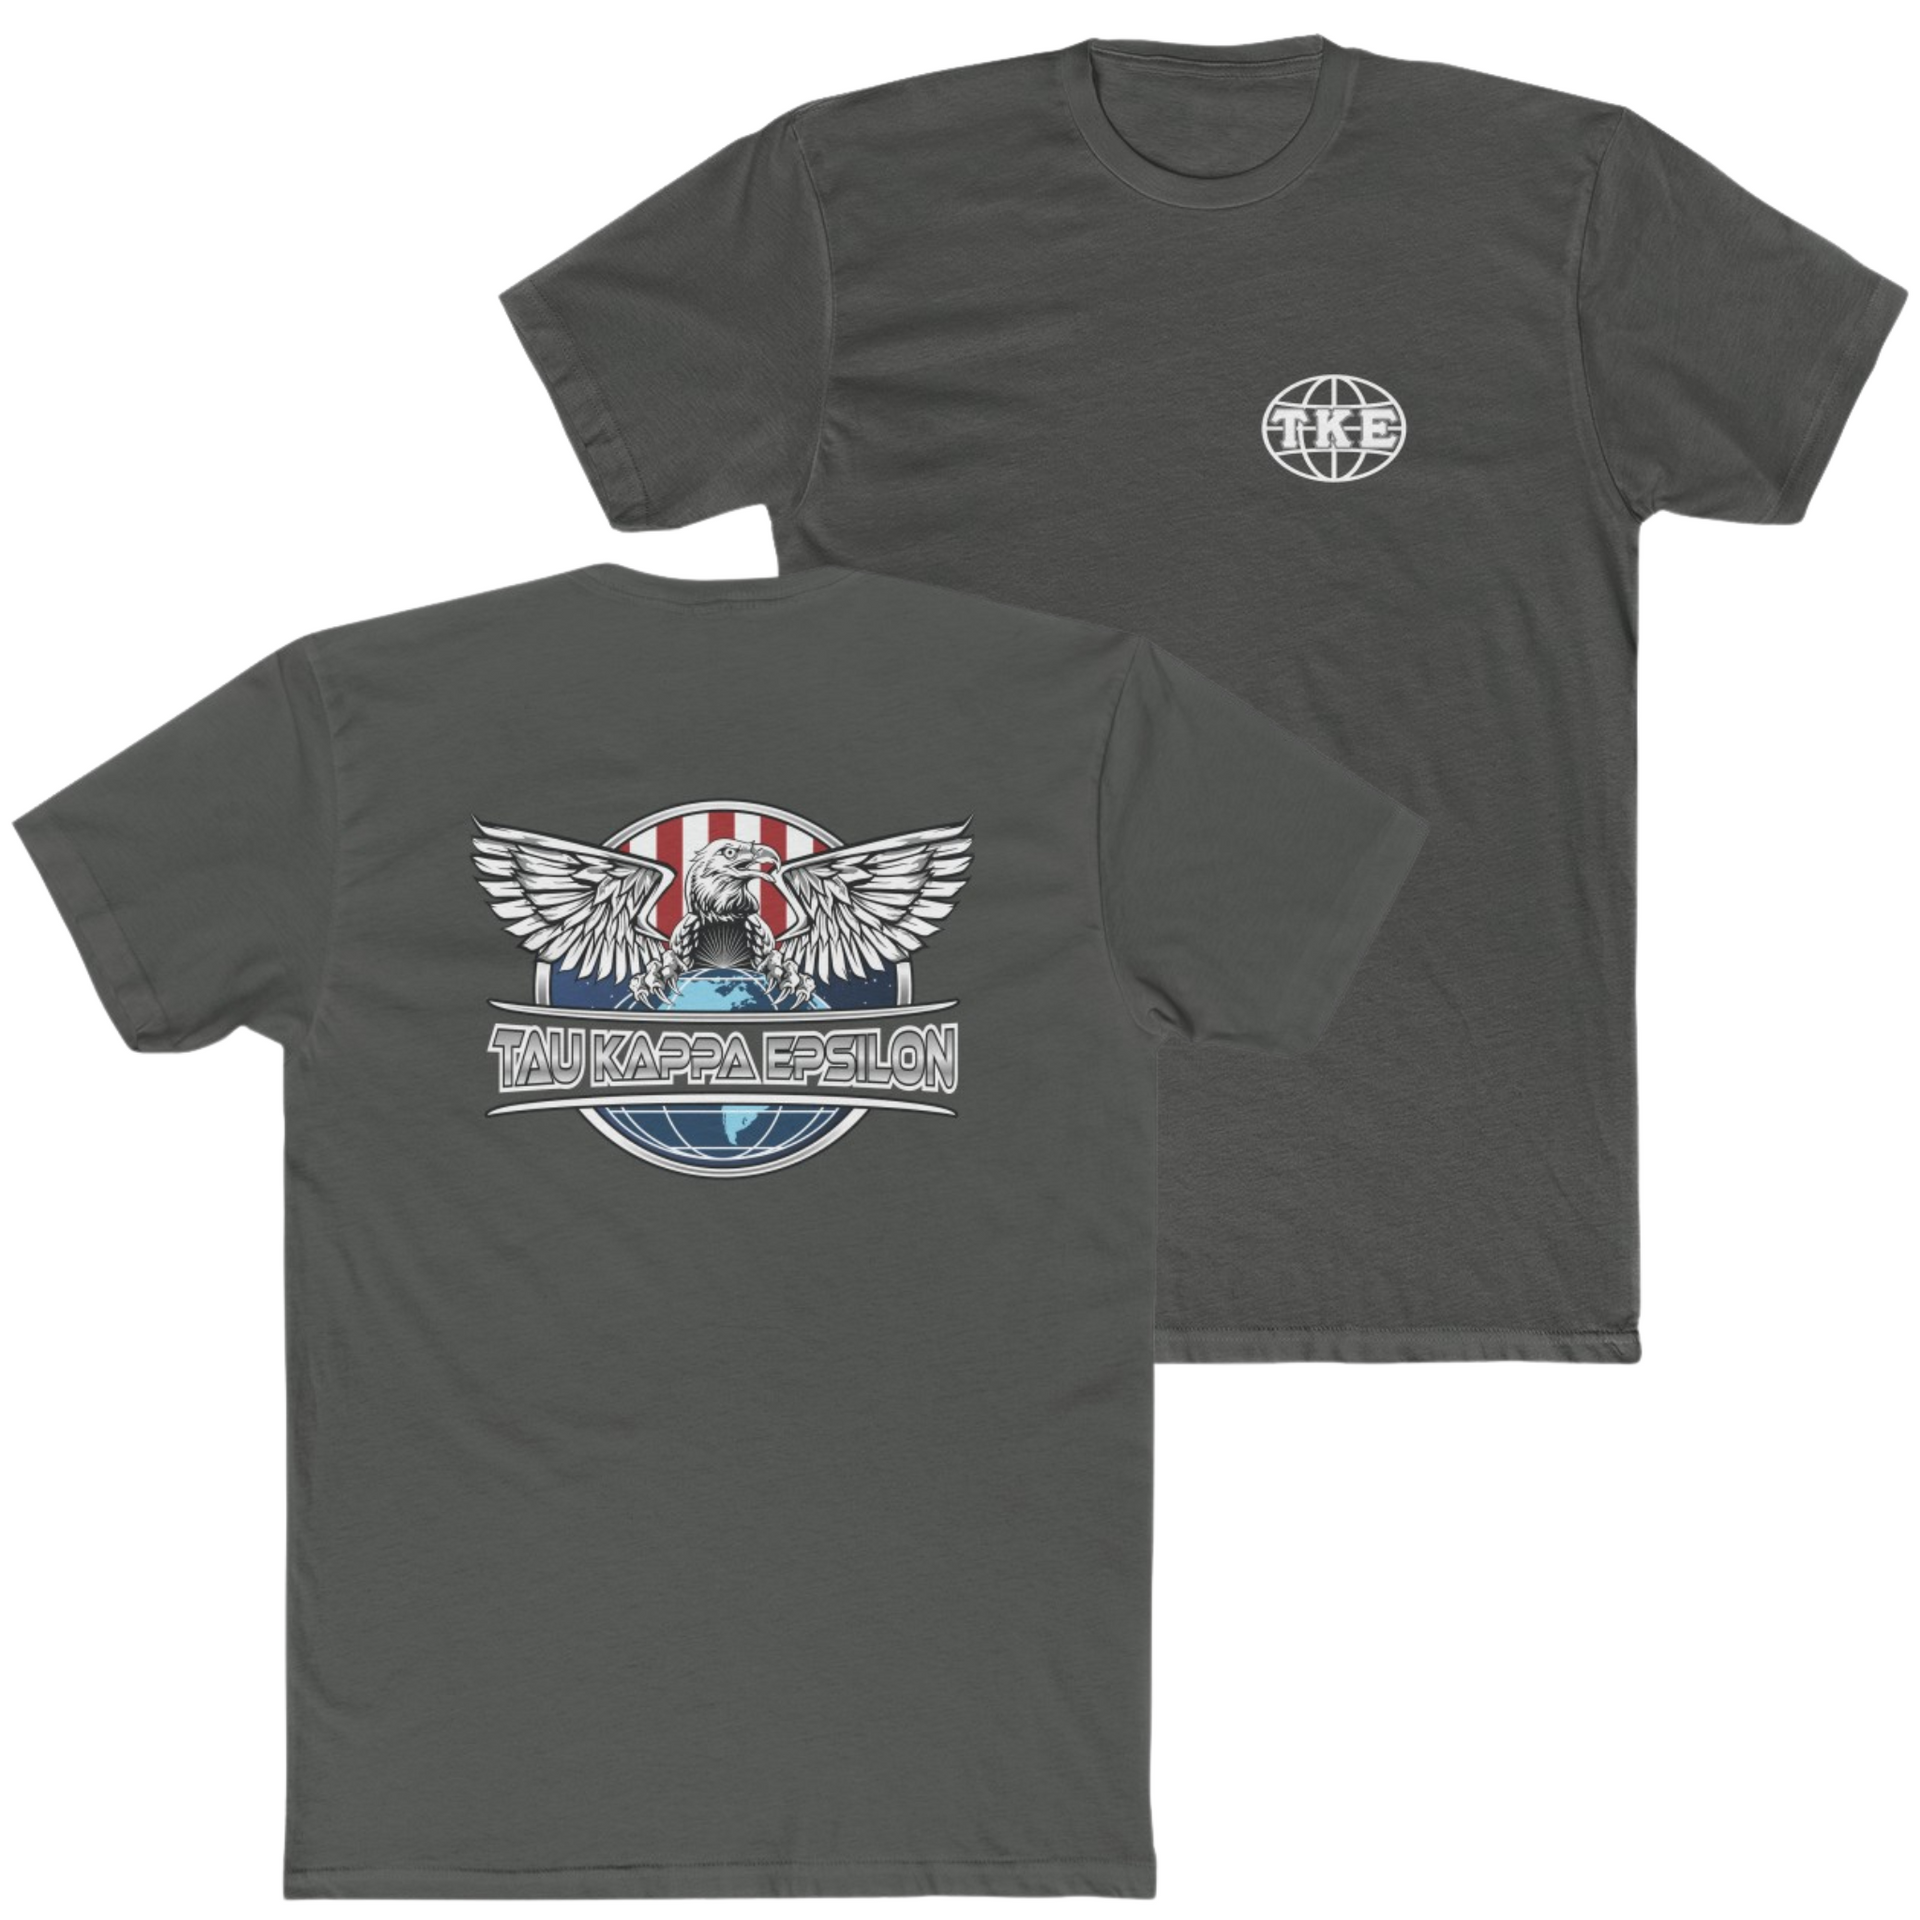 Grey Tau Kappa Epsilon Graphic T-Shirt | The Fraternal Order | Tau Kappa Epsilon Fraternity